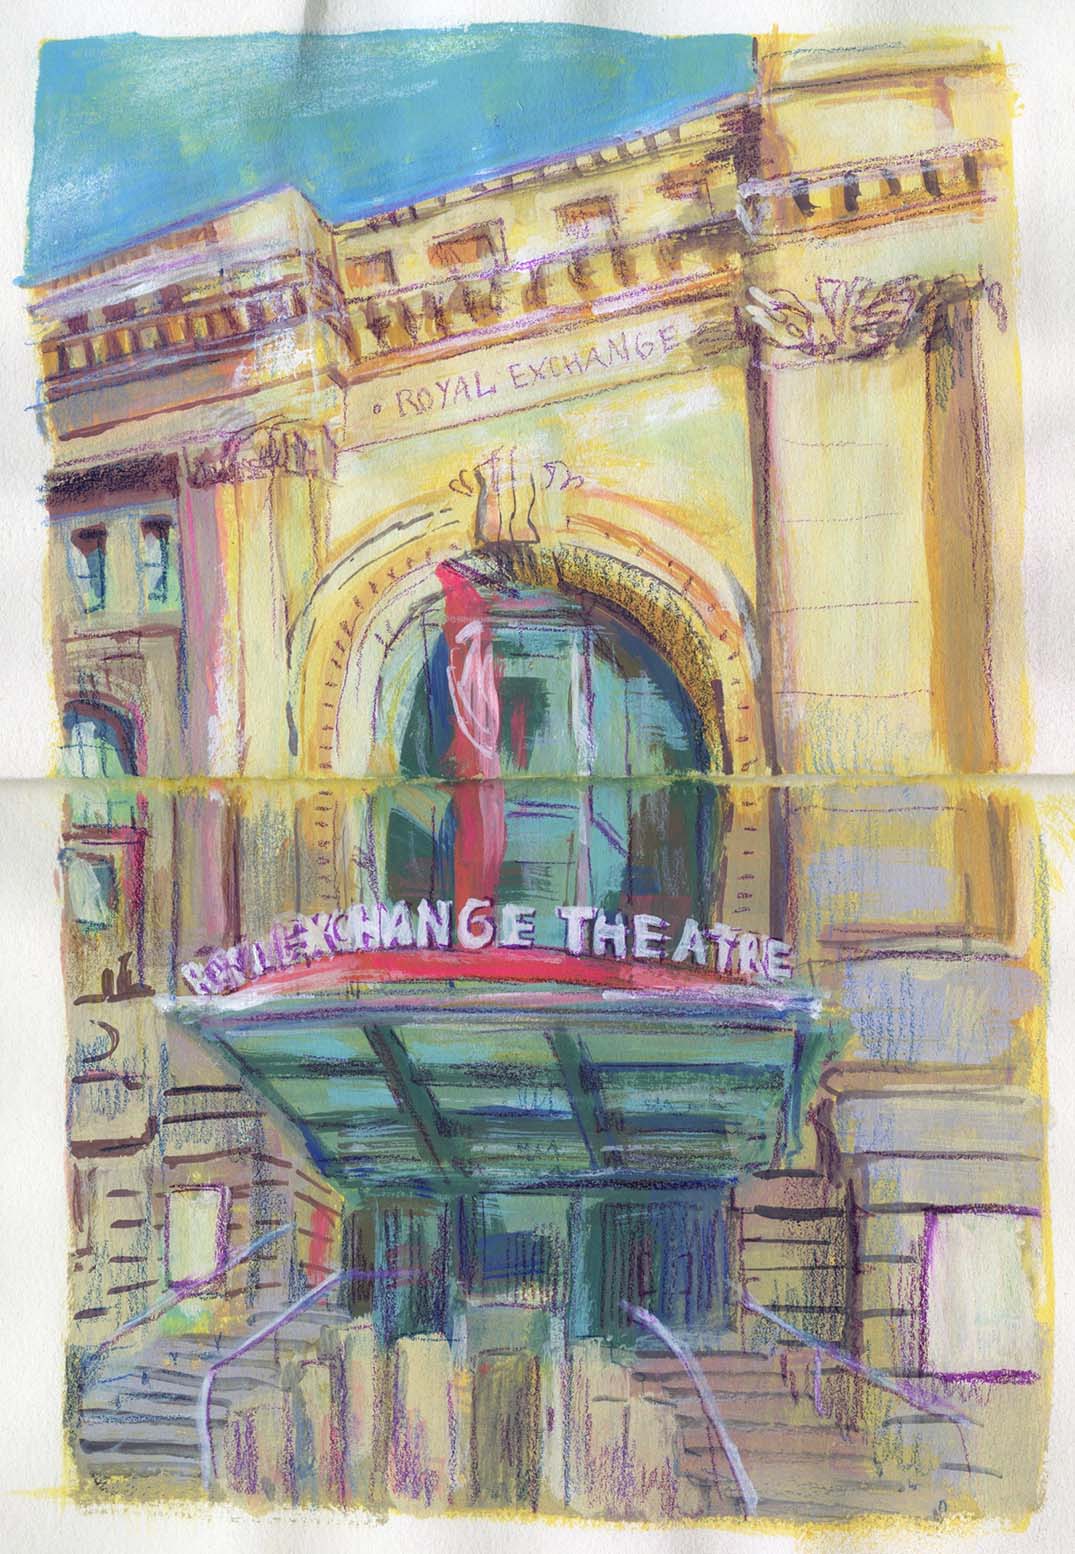 Illustration of Royal Exchange Theatre exterior